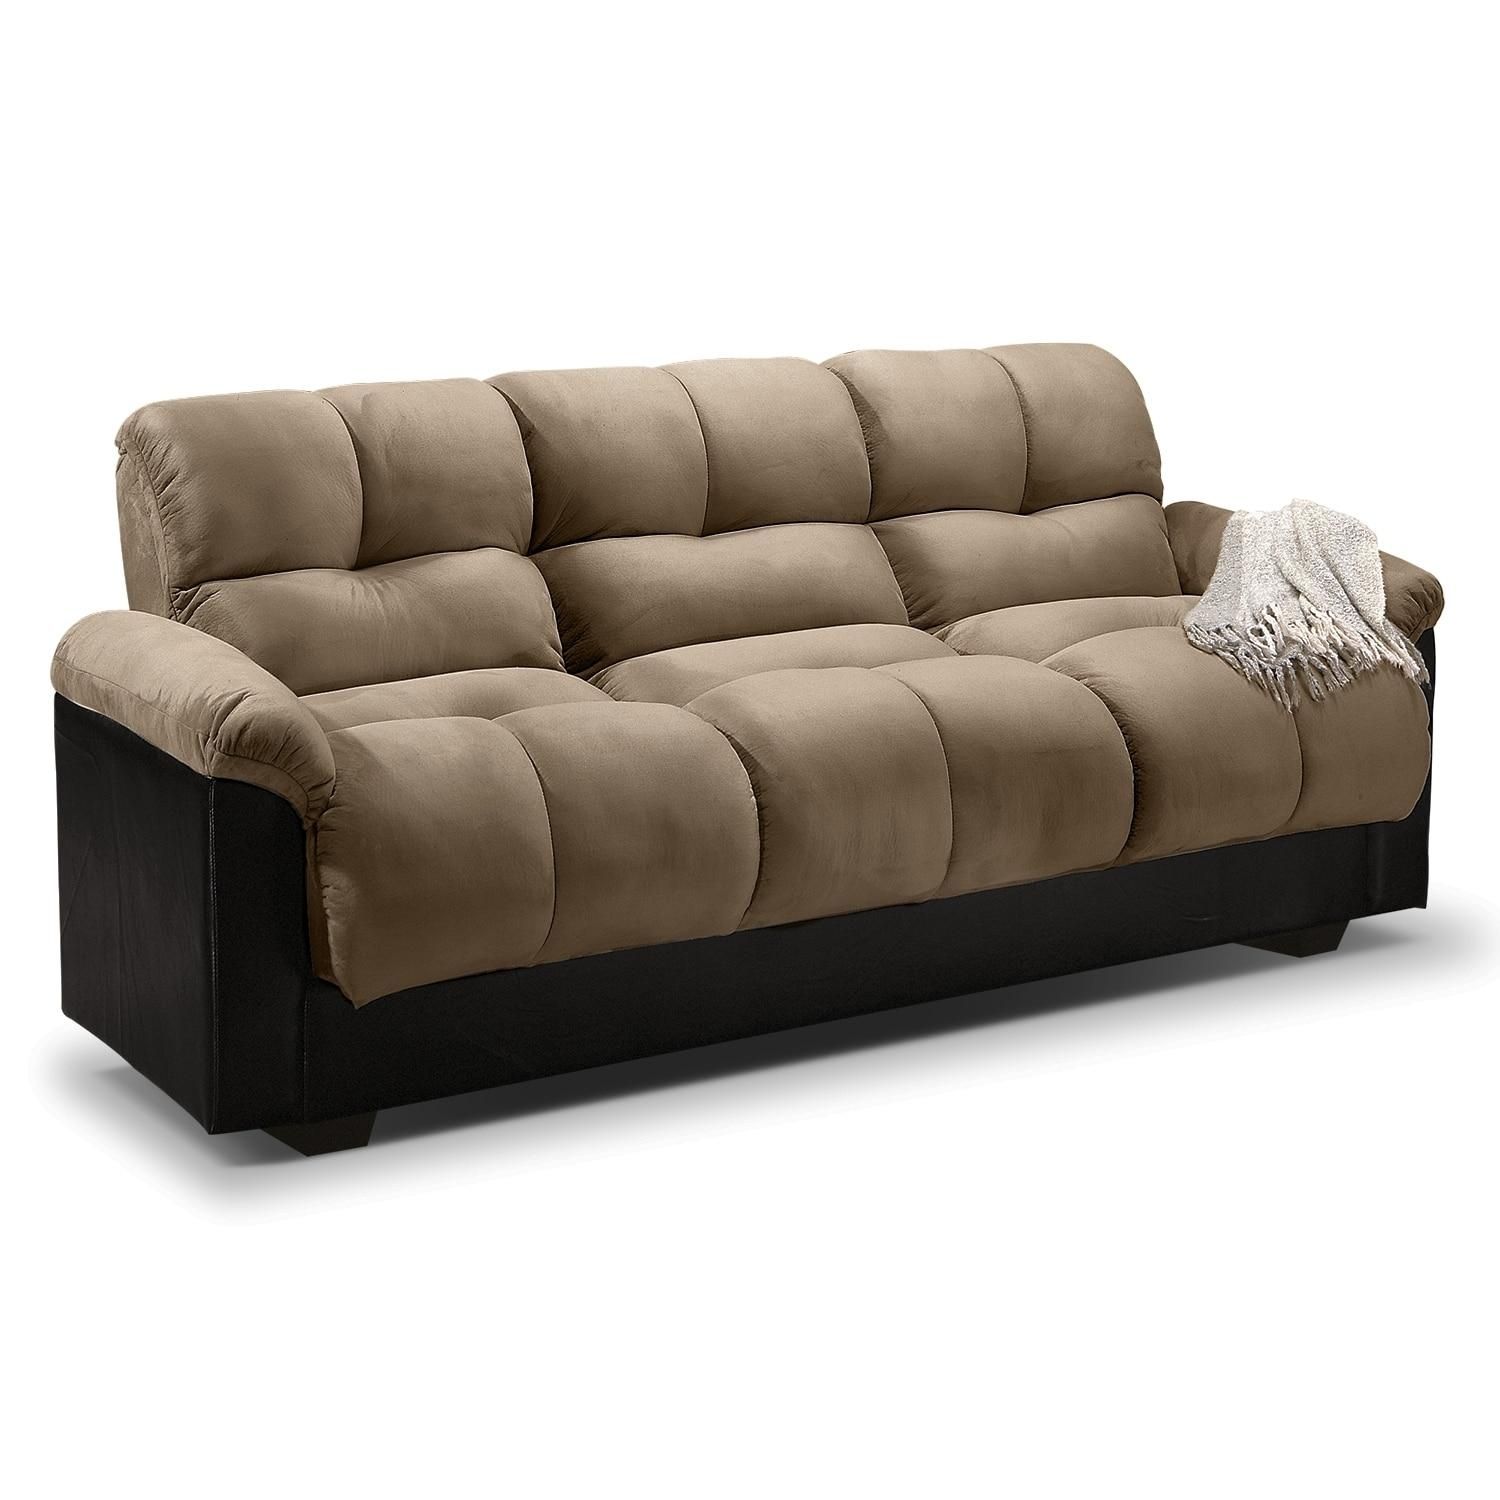 Ara Futon Sofa Bed With Storage – Hazelnut | Value City Furniture With Leather Fouton Sofas (View 8 of 20)